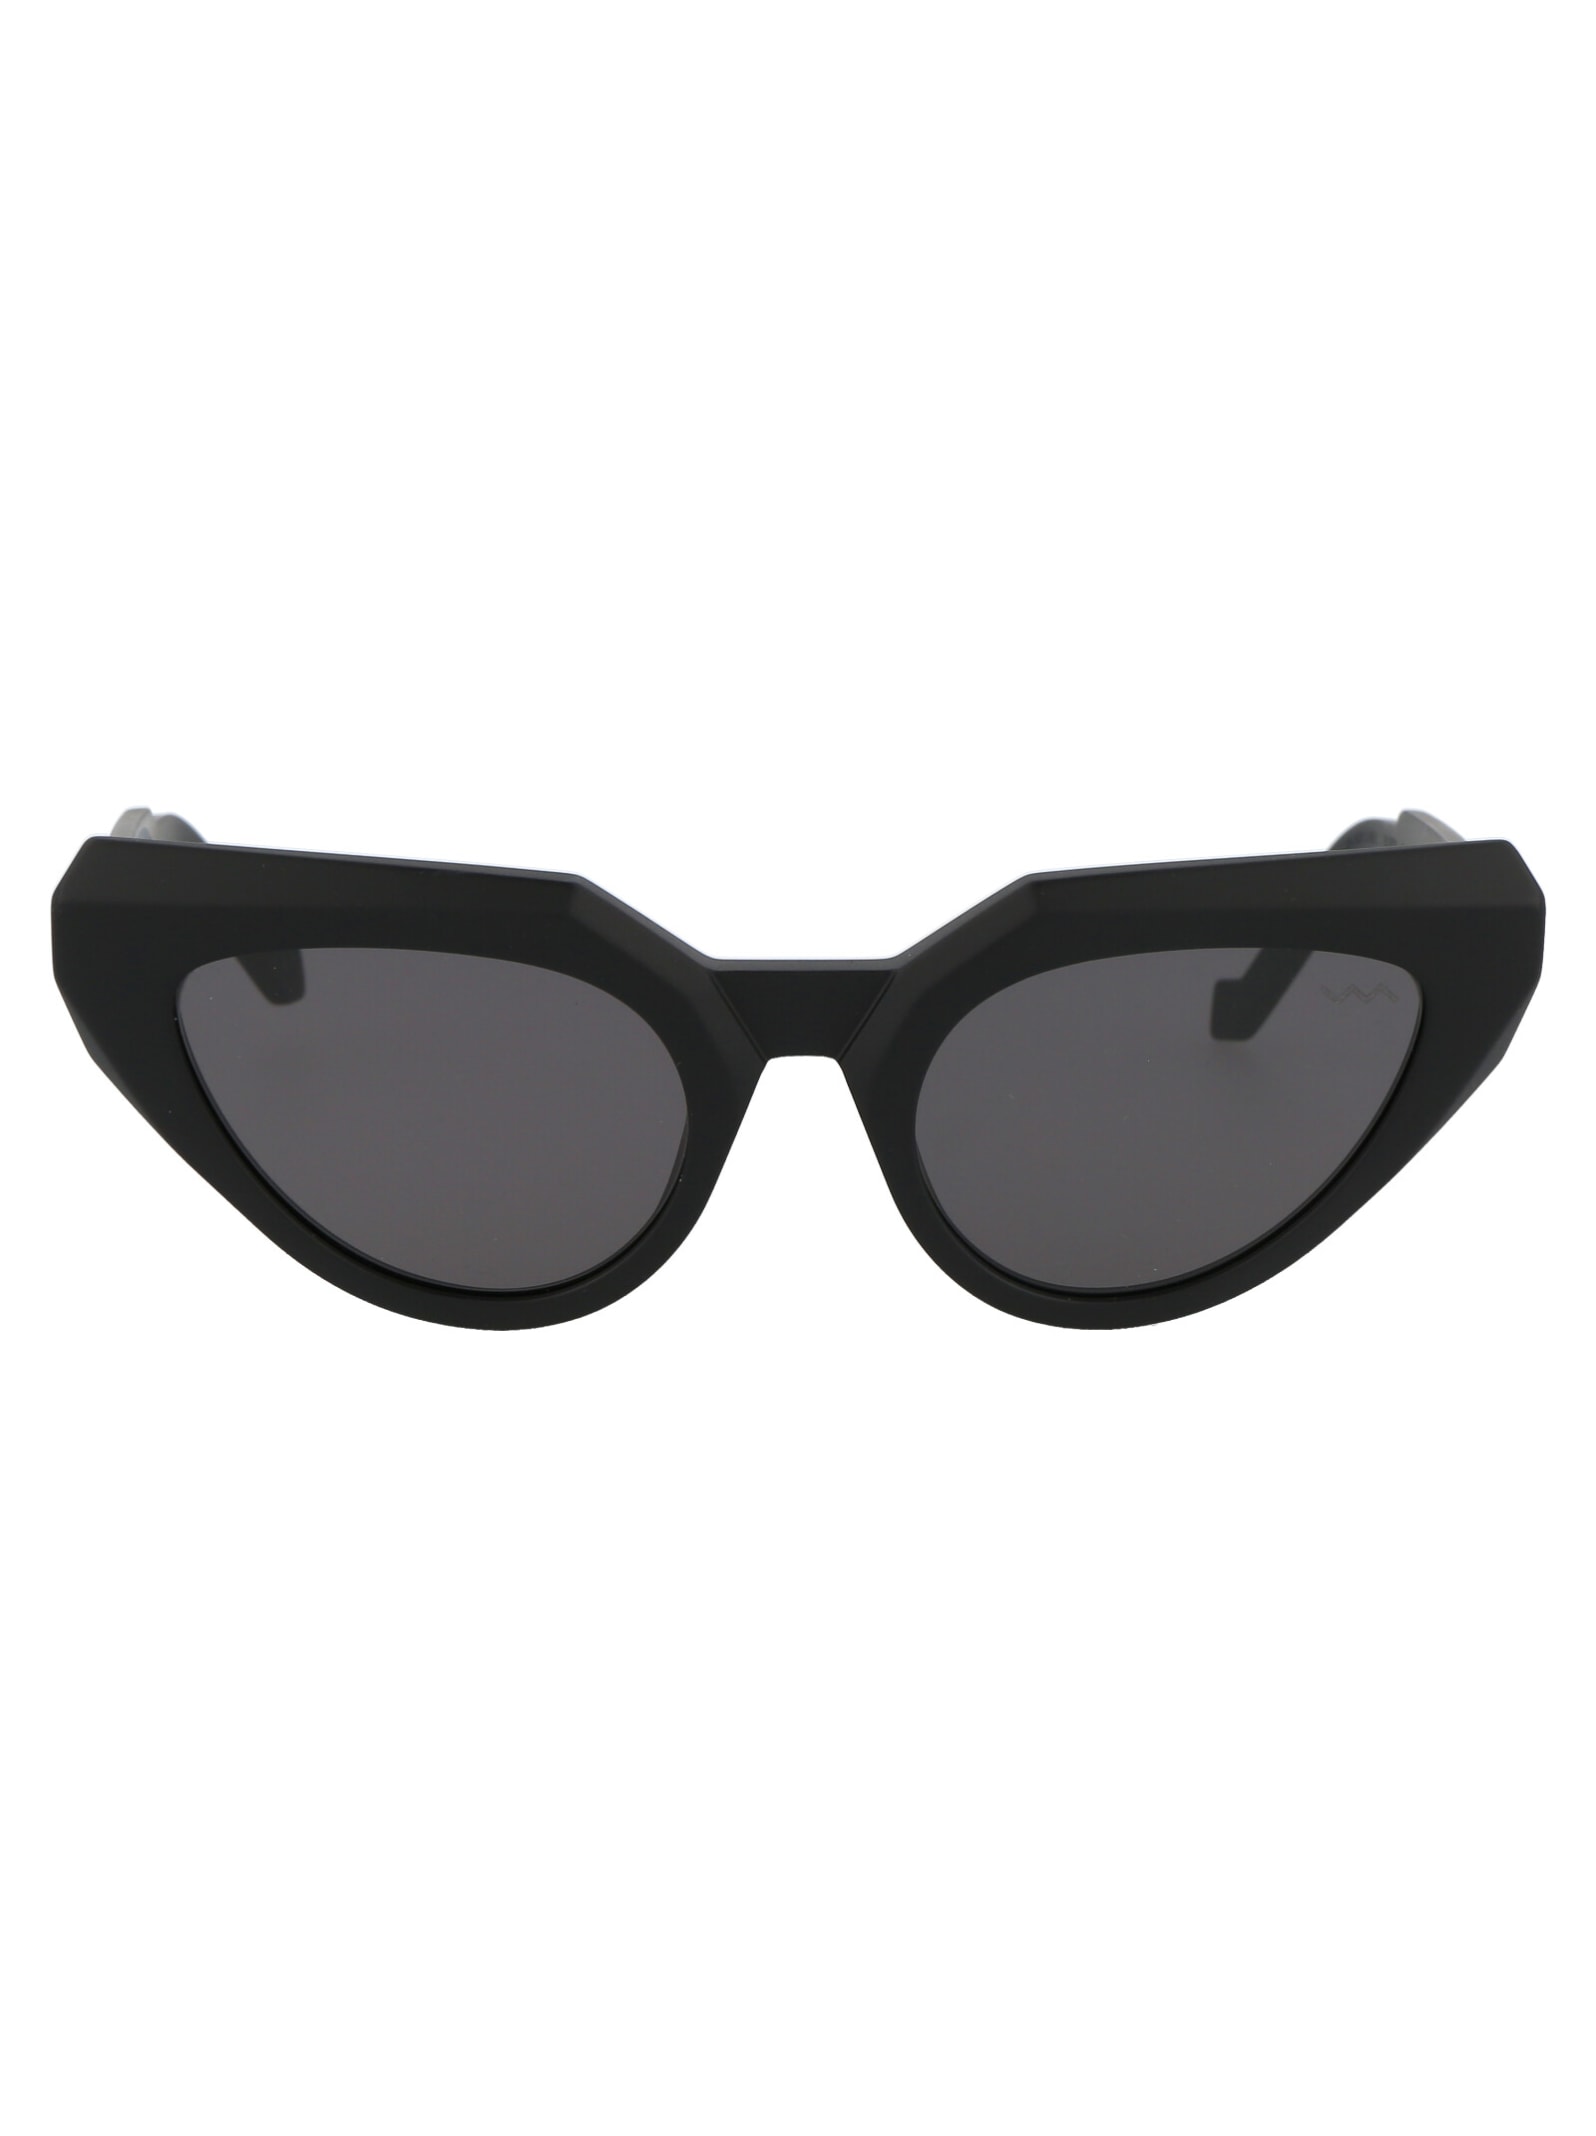 Shop Vava Bl0028 Sunglasses In Matte Black|silver Flex Hinges|black Lenses